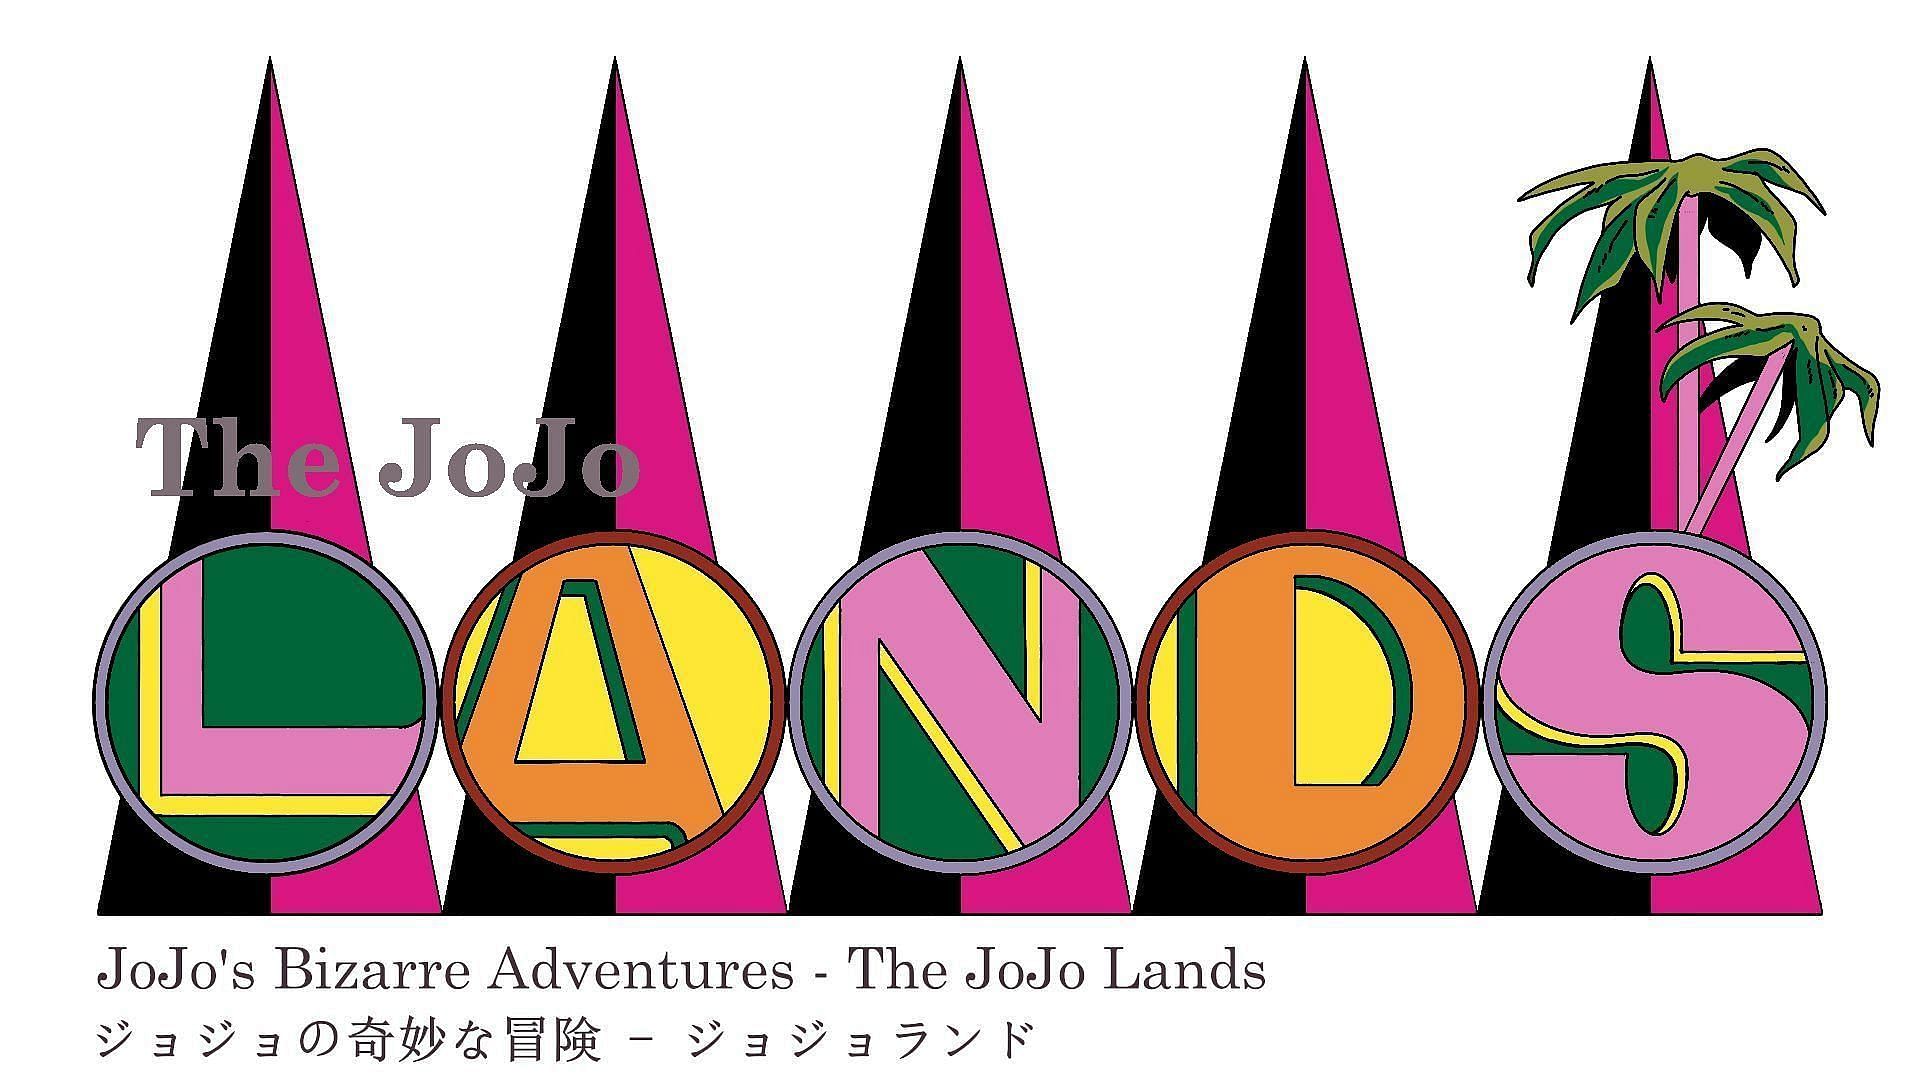 JoJoLands chapter 5 is set to continue the gone-awry raid of Rohan Kishibe